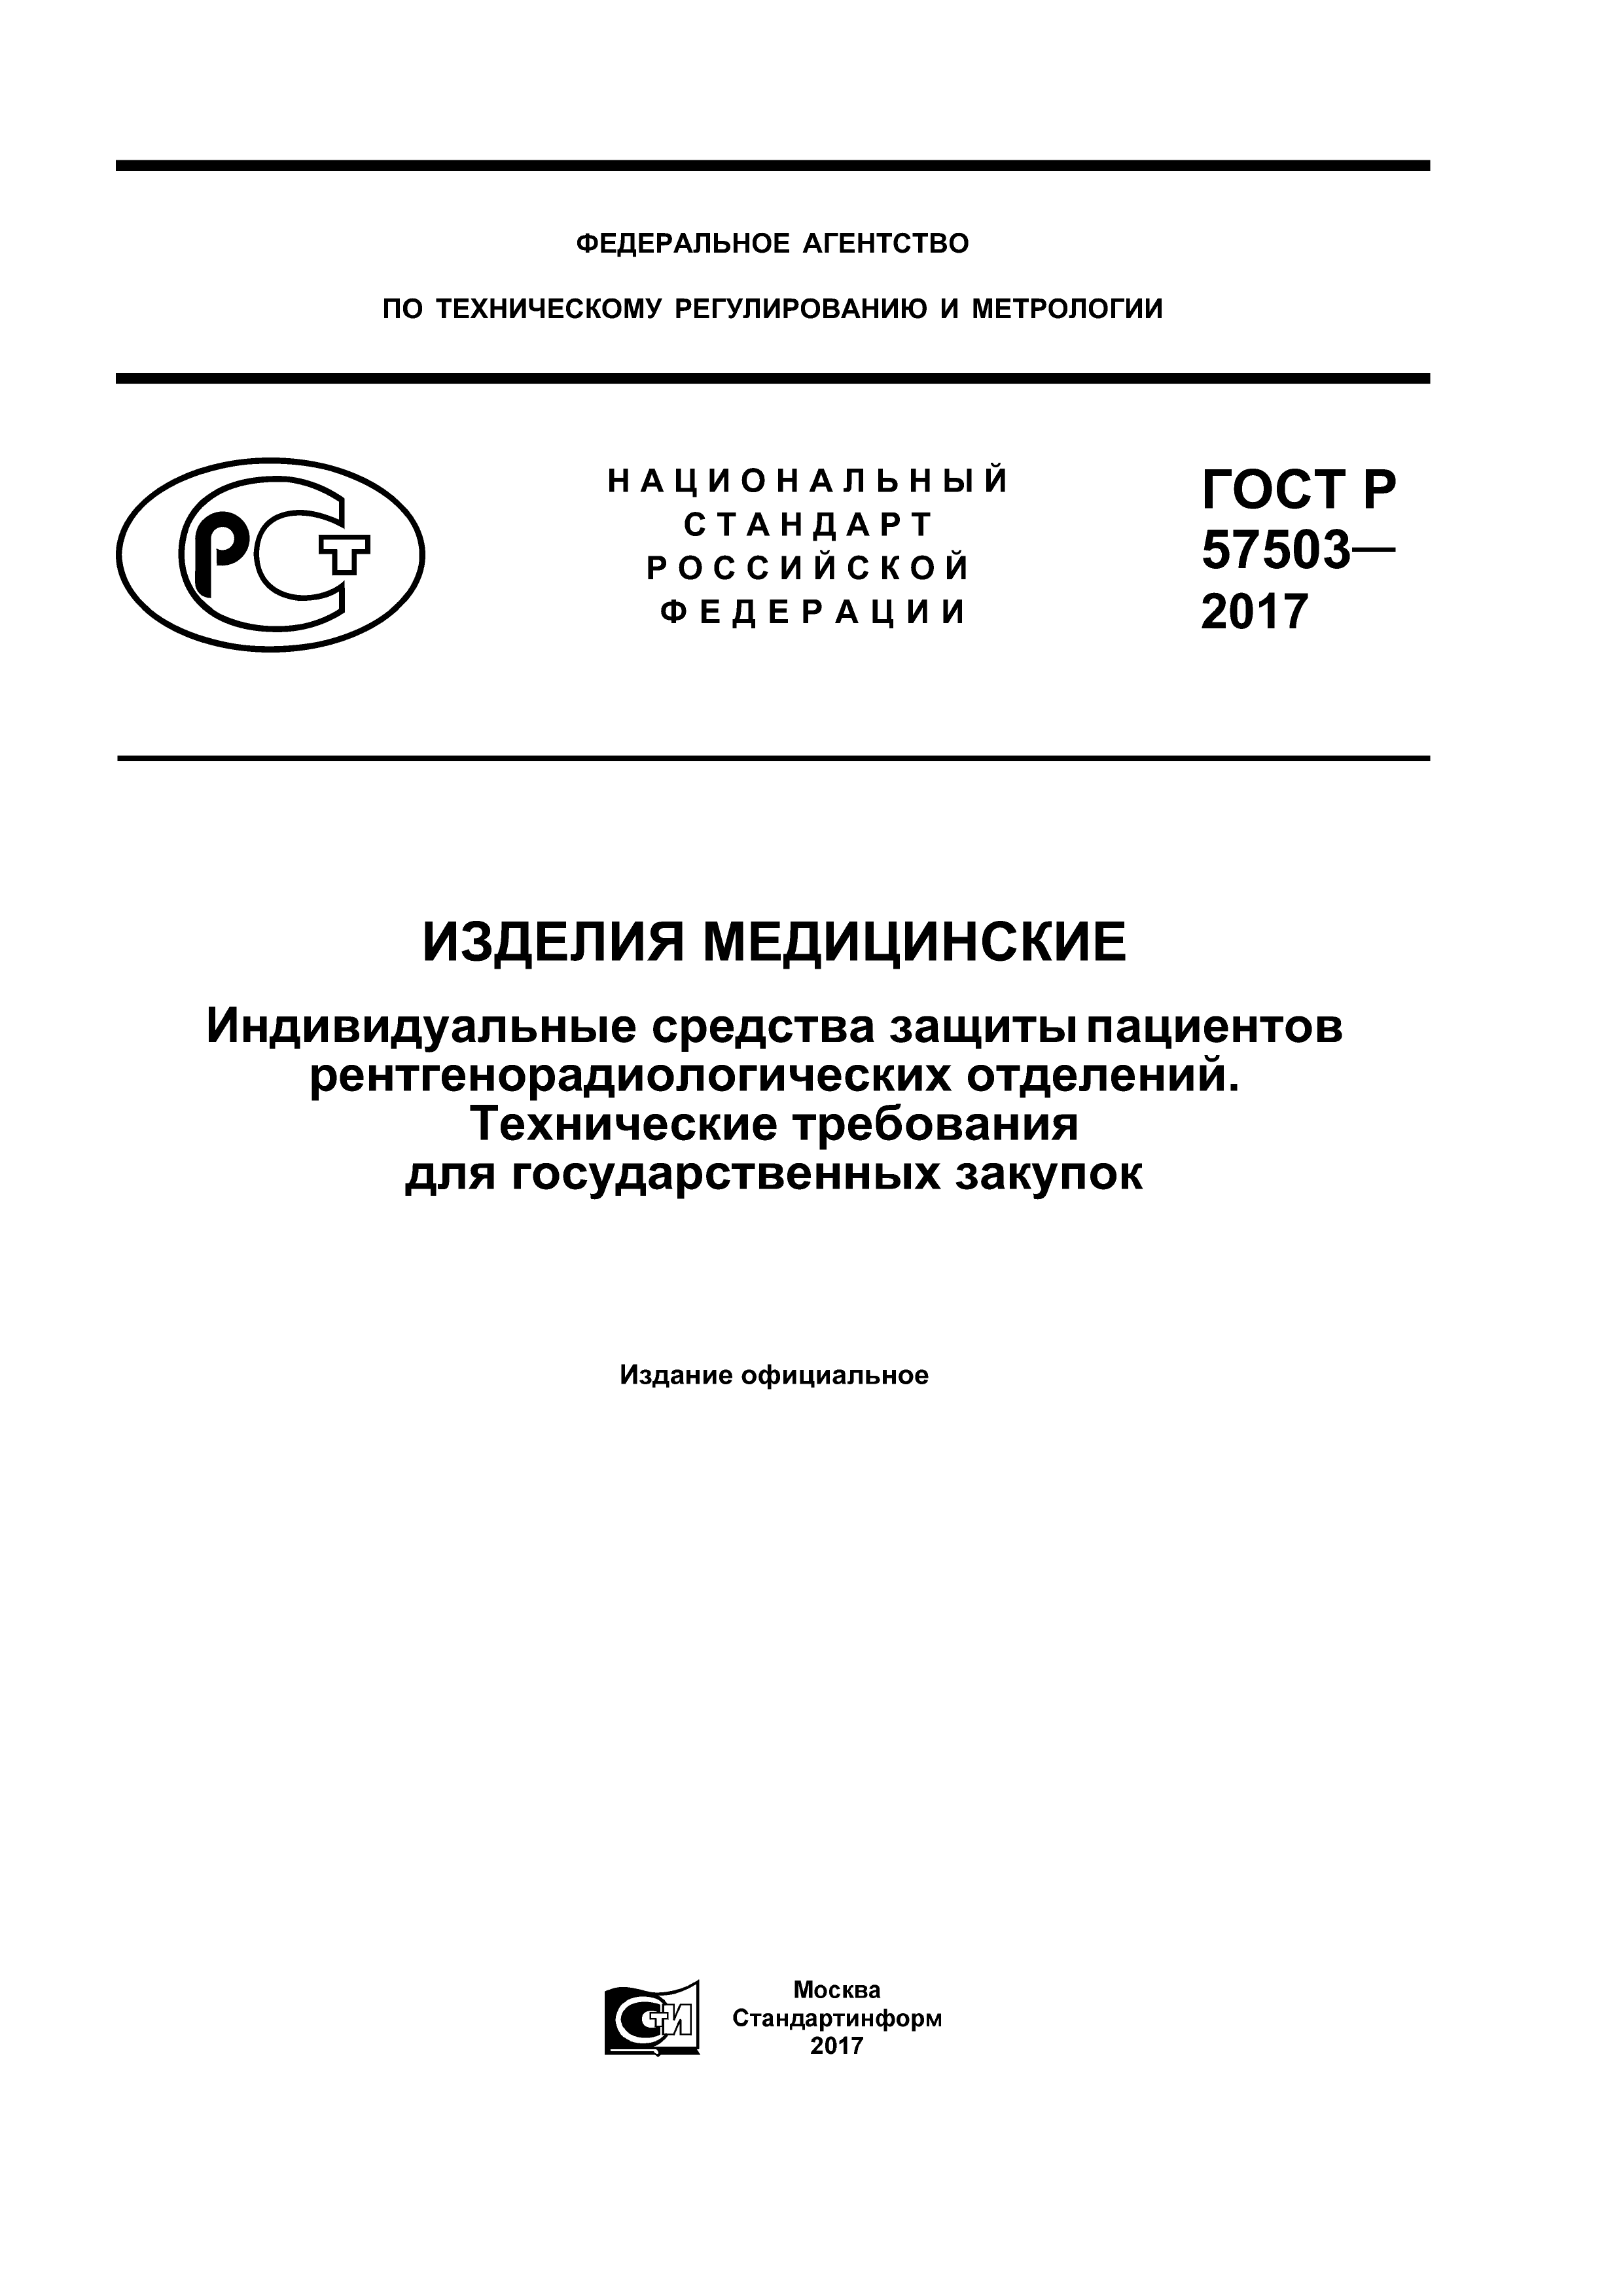 ГОСТ Р 57503-2017